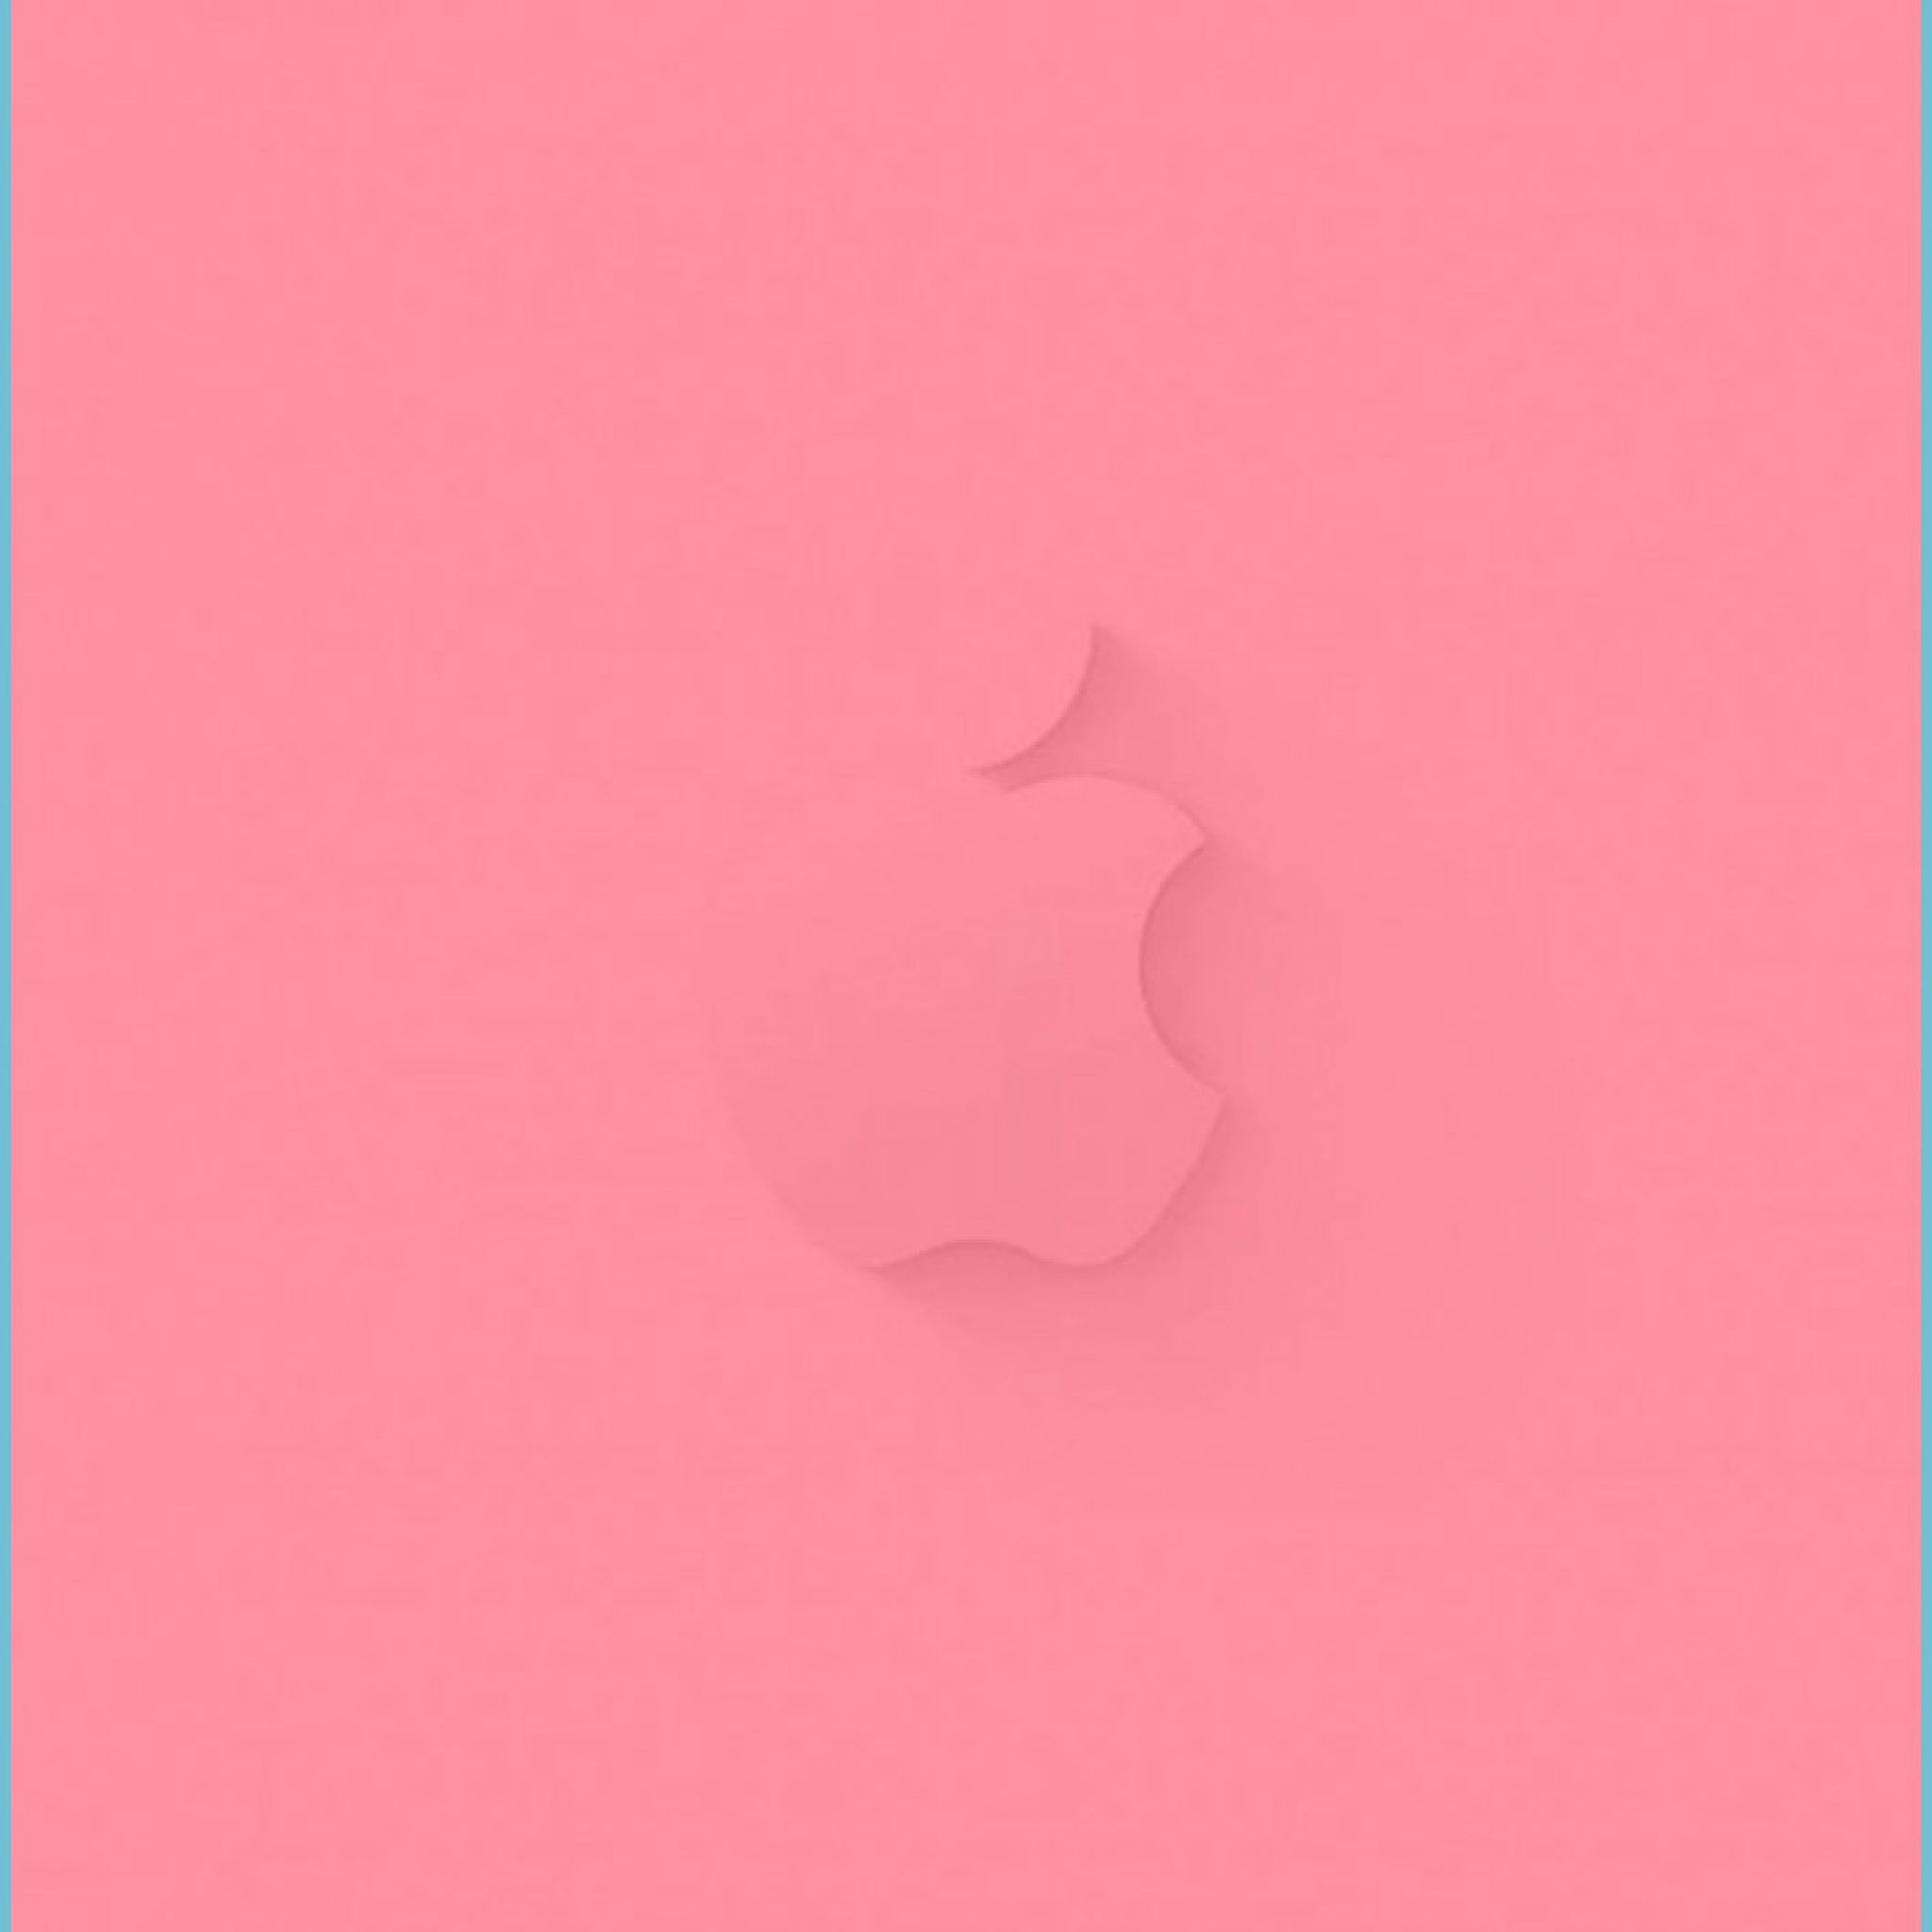 Solid Pink iPhone Wallpaper pink wallpaper